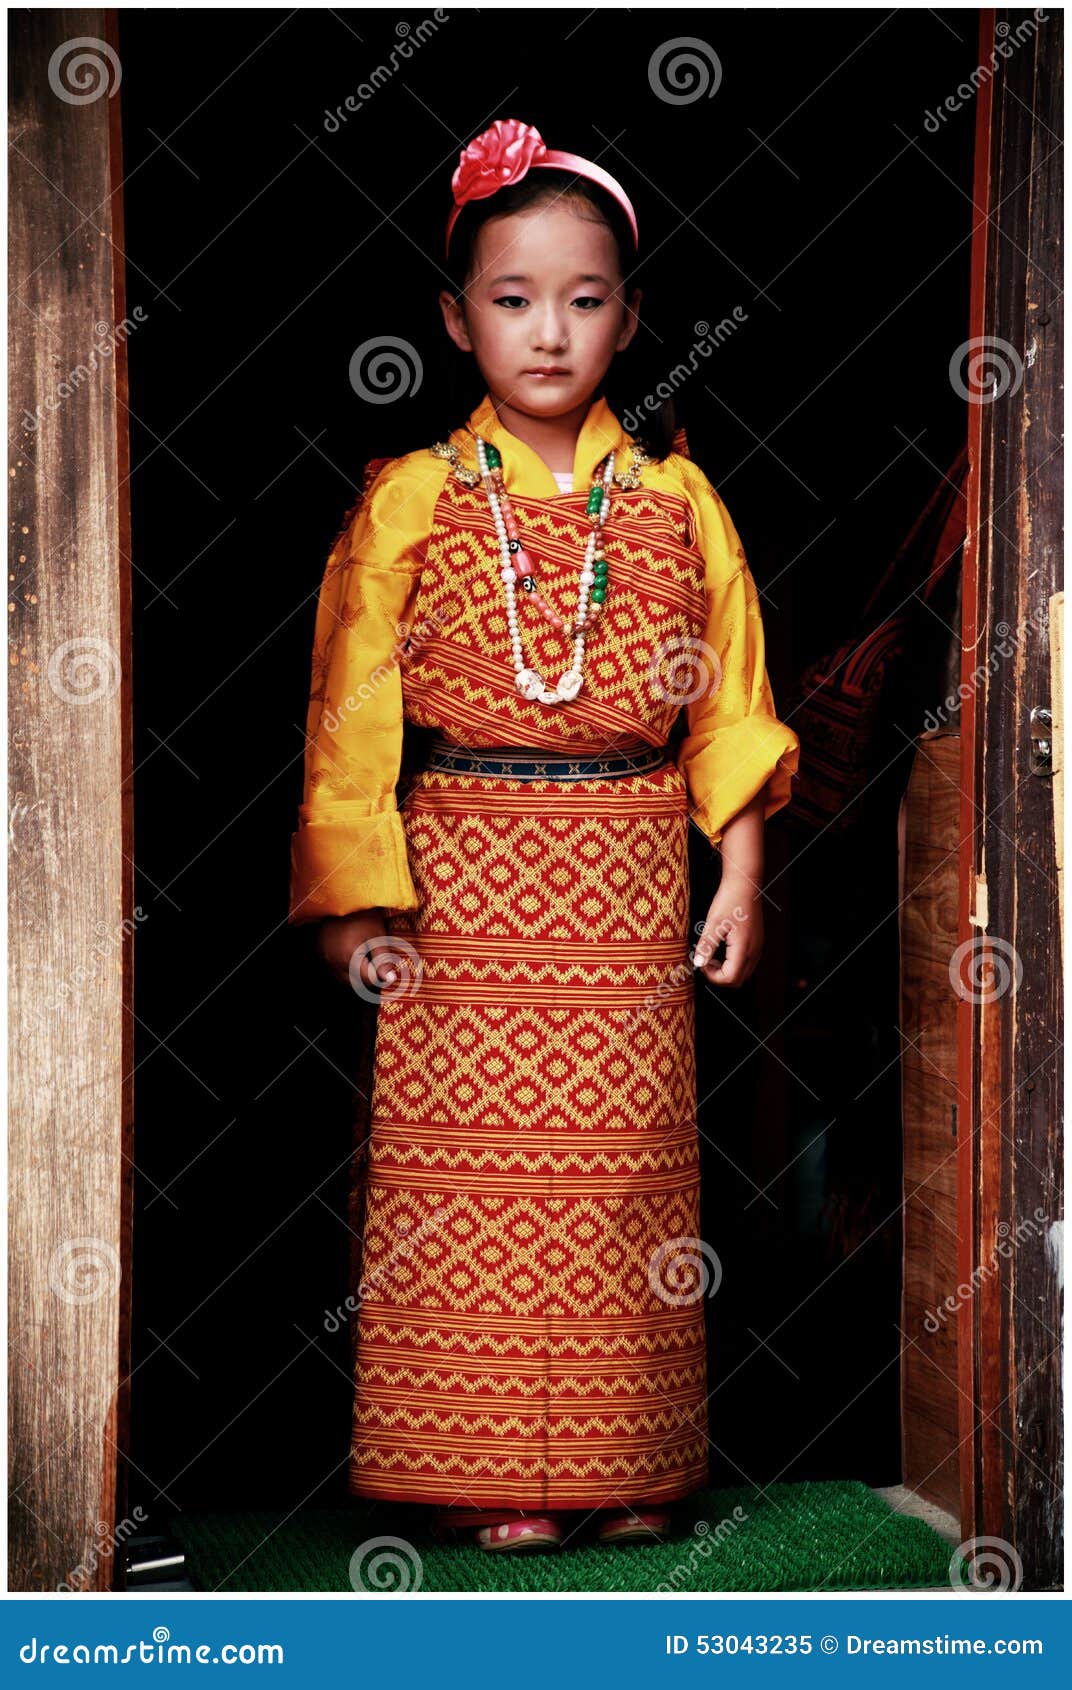 Amazing Portraits Of Modern Women Wearing Traditional 